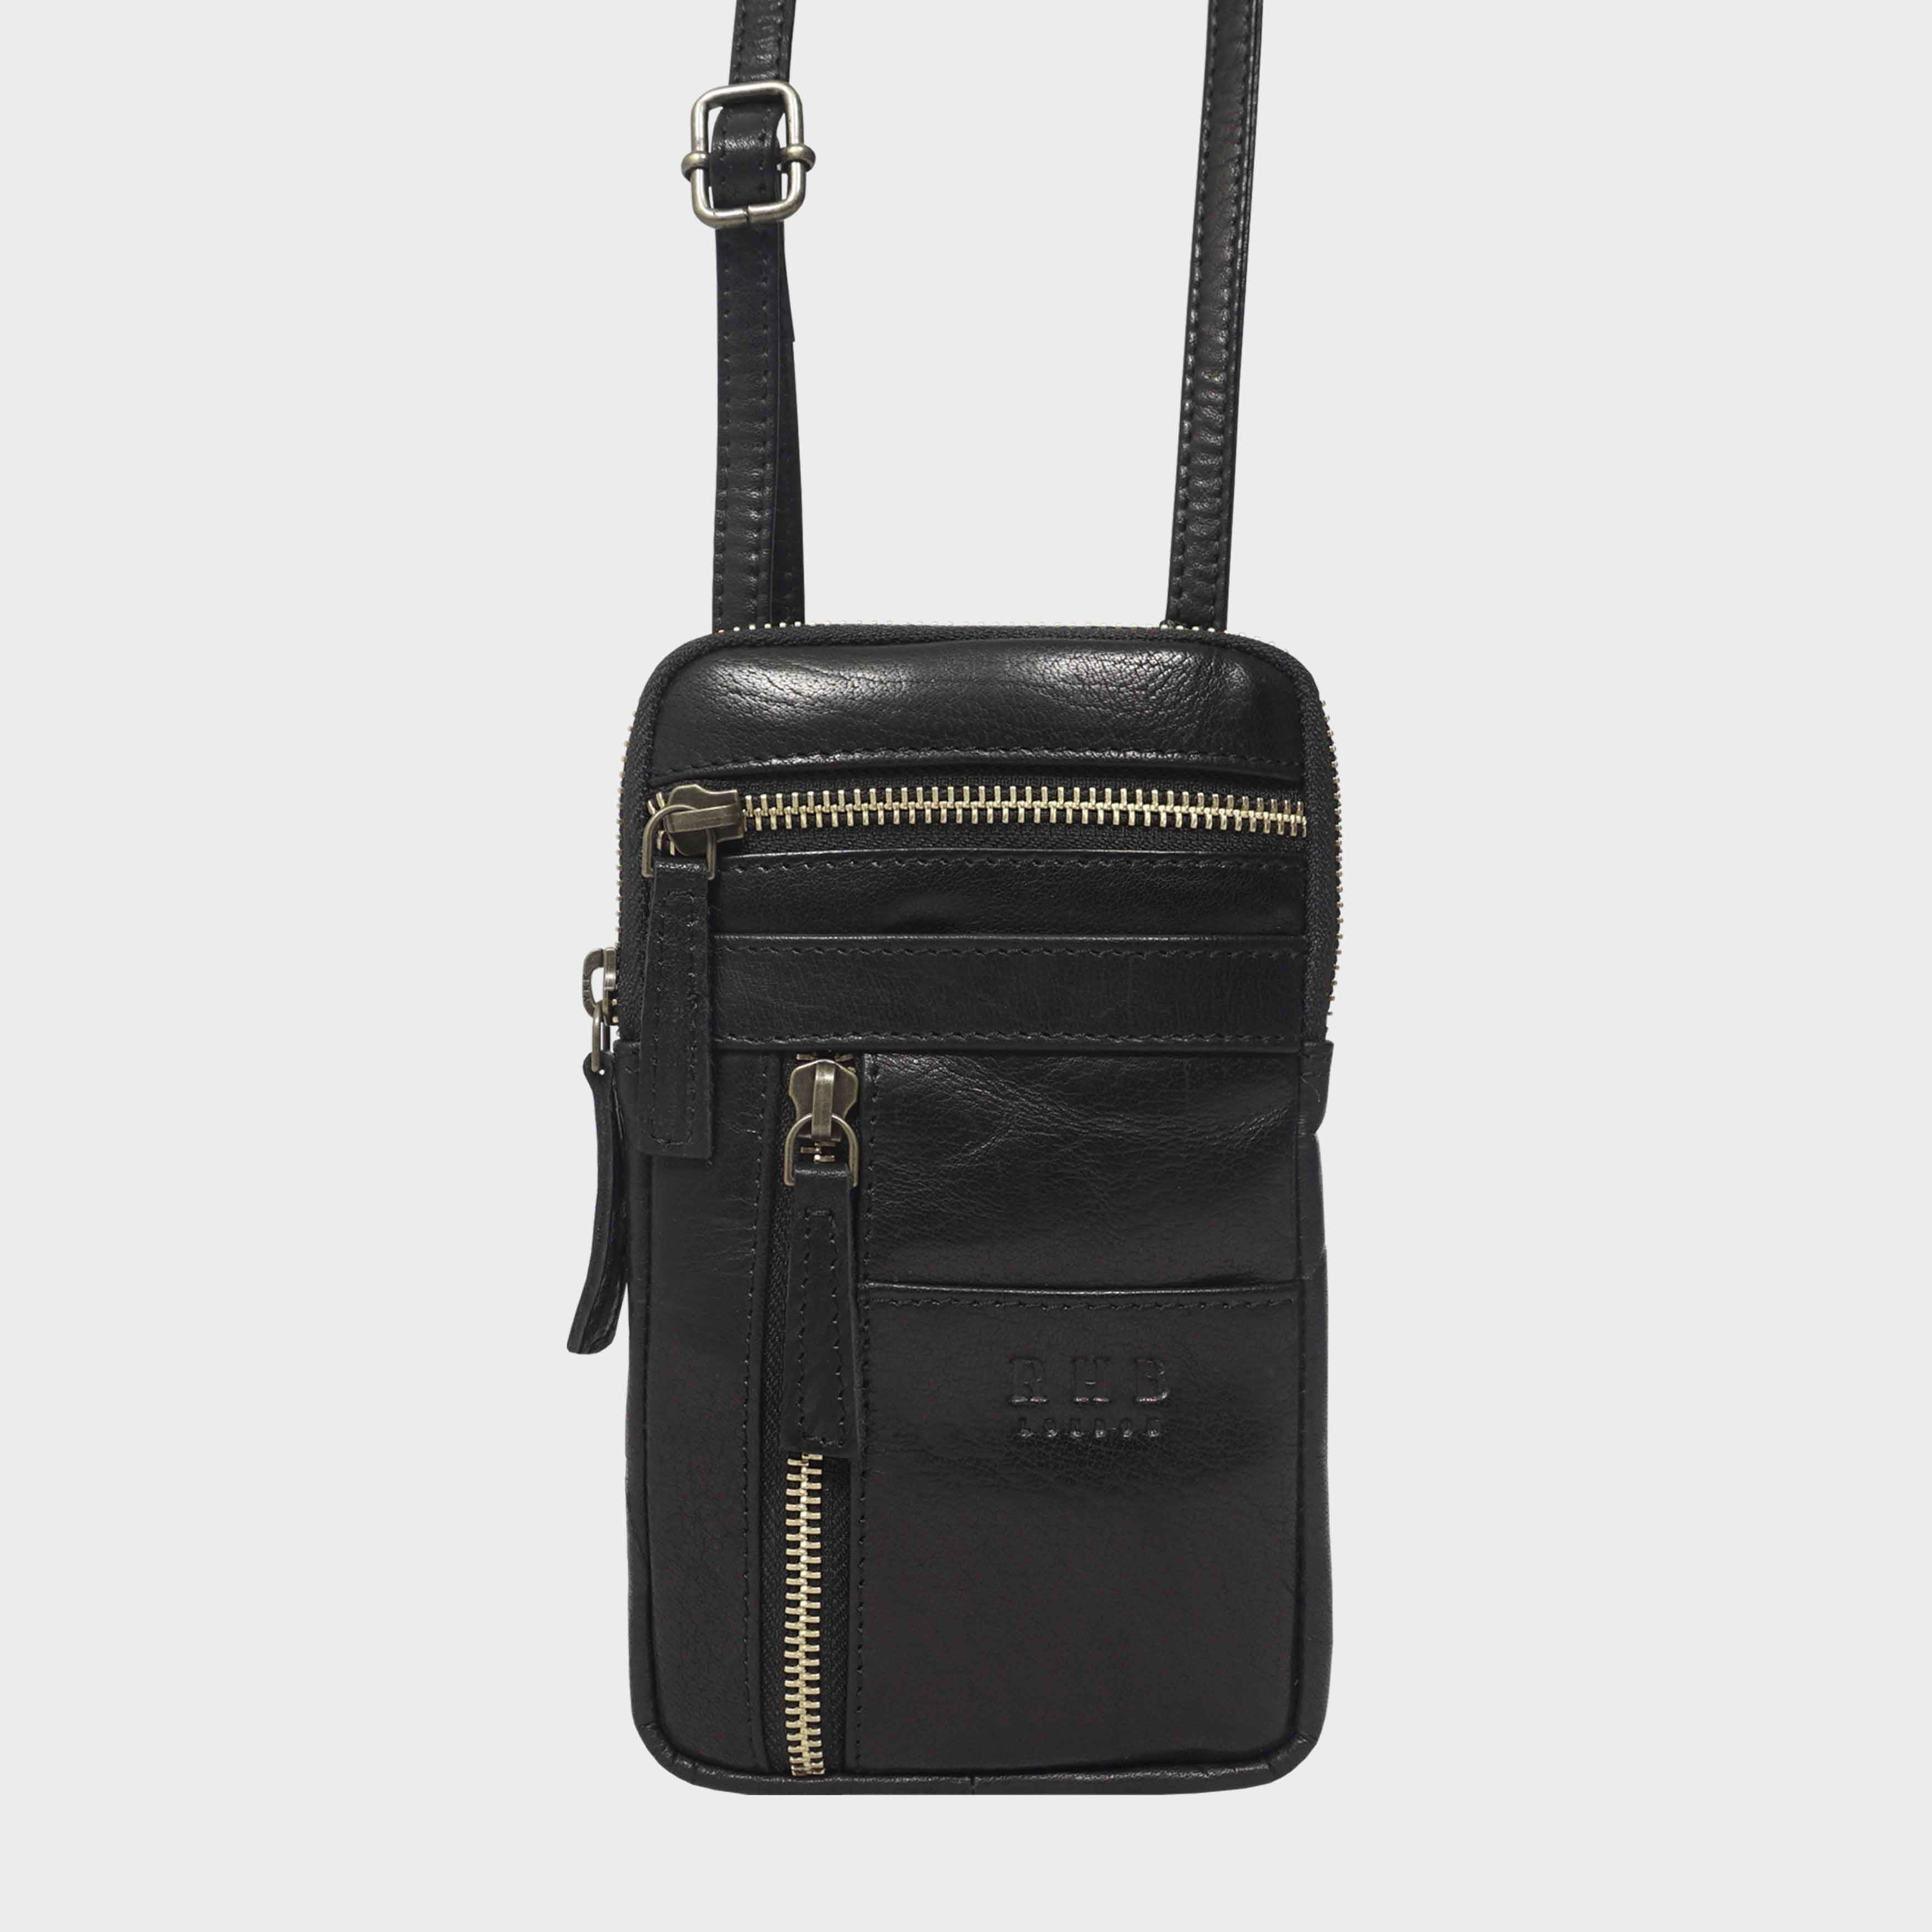 Black Real Leather Mobile Phone Crossbody Bag for Women | Brooke ...